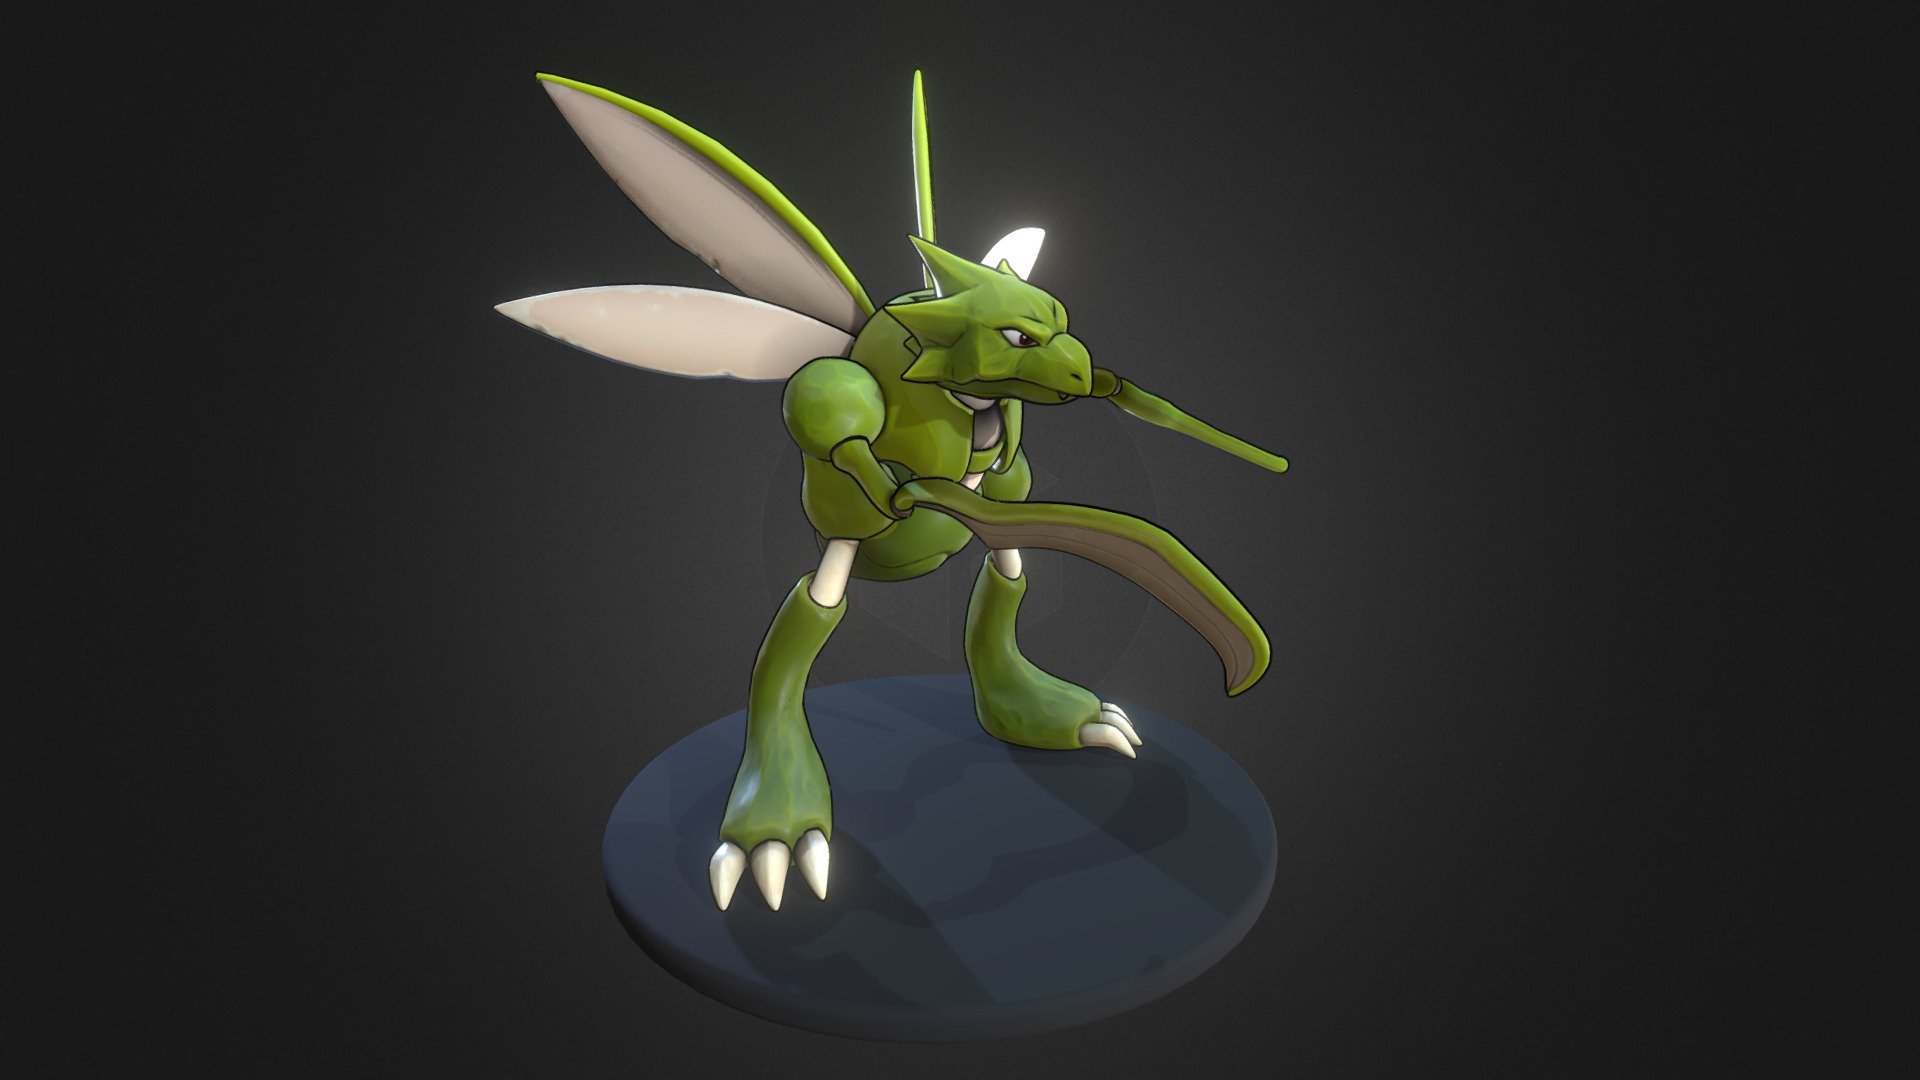 The green one - Scyther Pokemon - 3D model by 3dlogicus 3d model